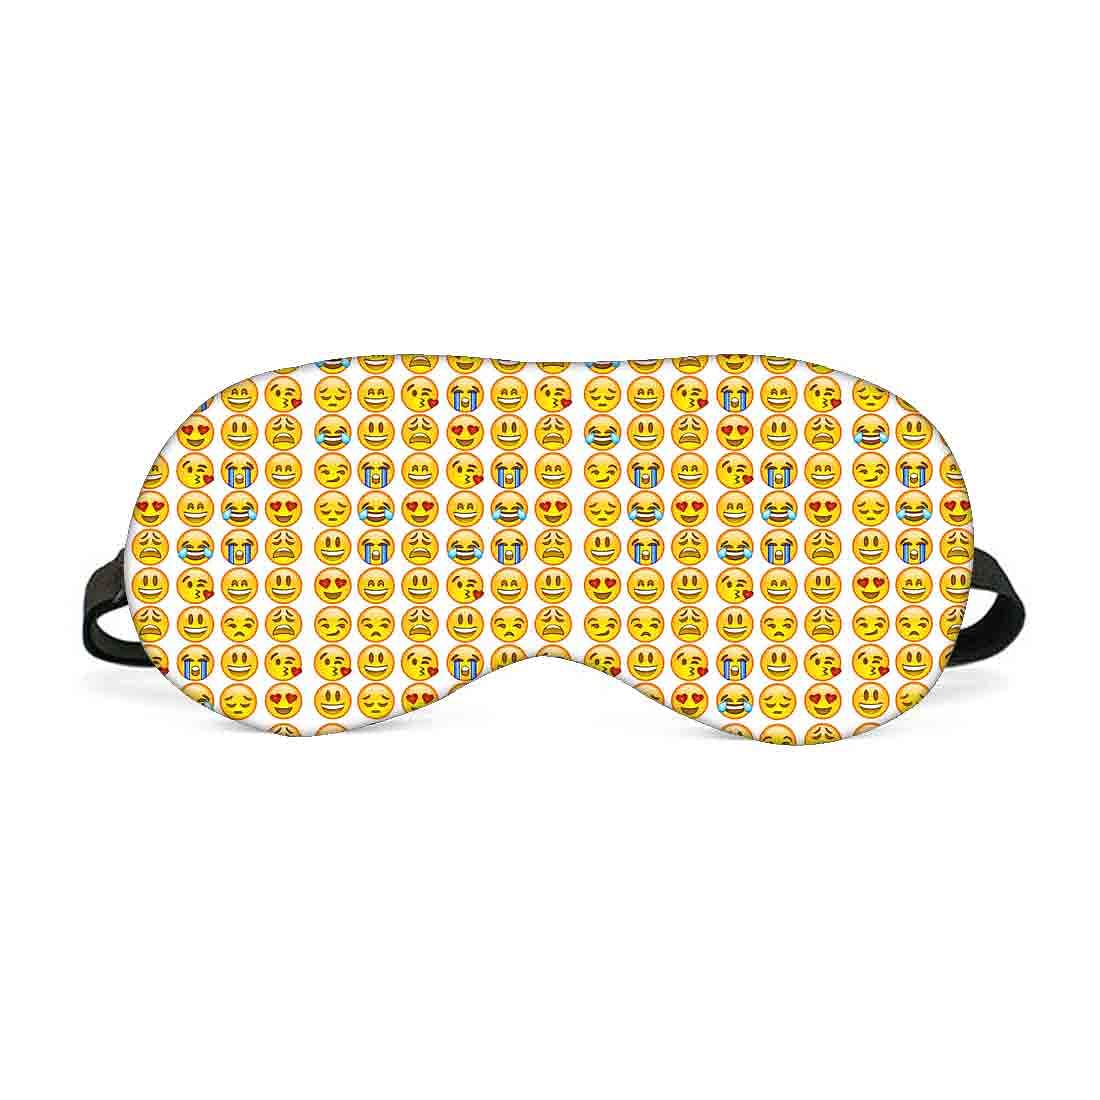 Designer Travel Eye Mask for Sleeping - Emojis - Made in India Nutcase